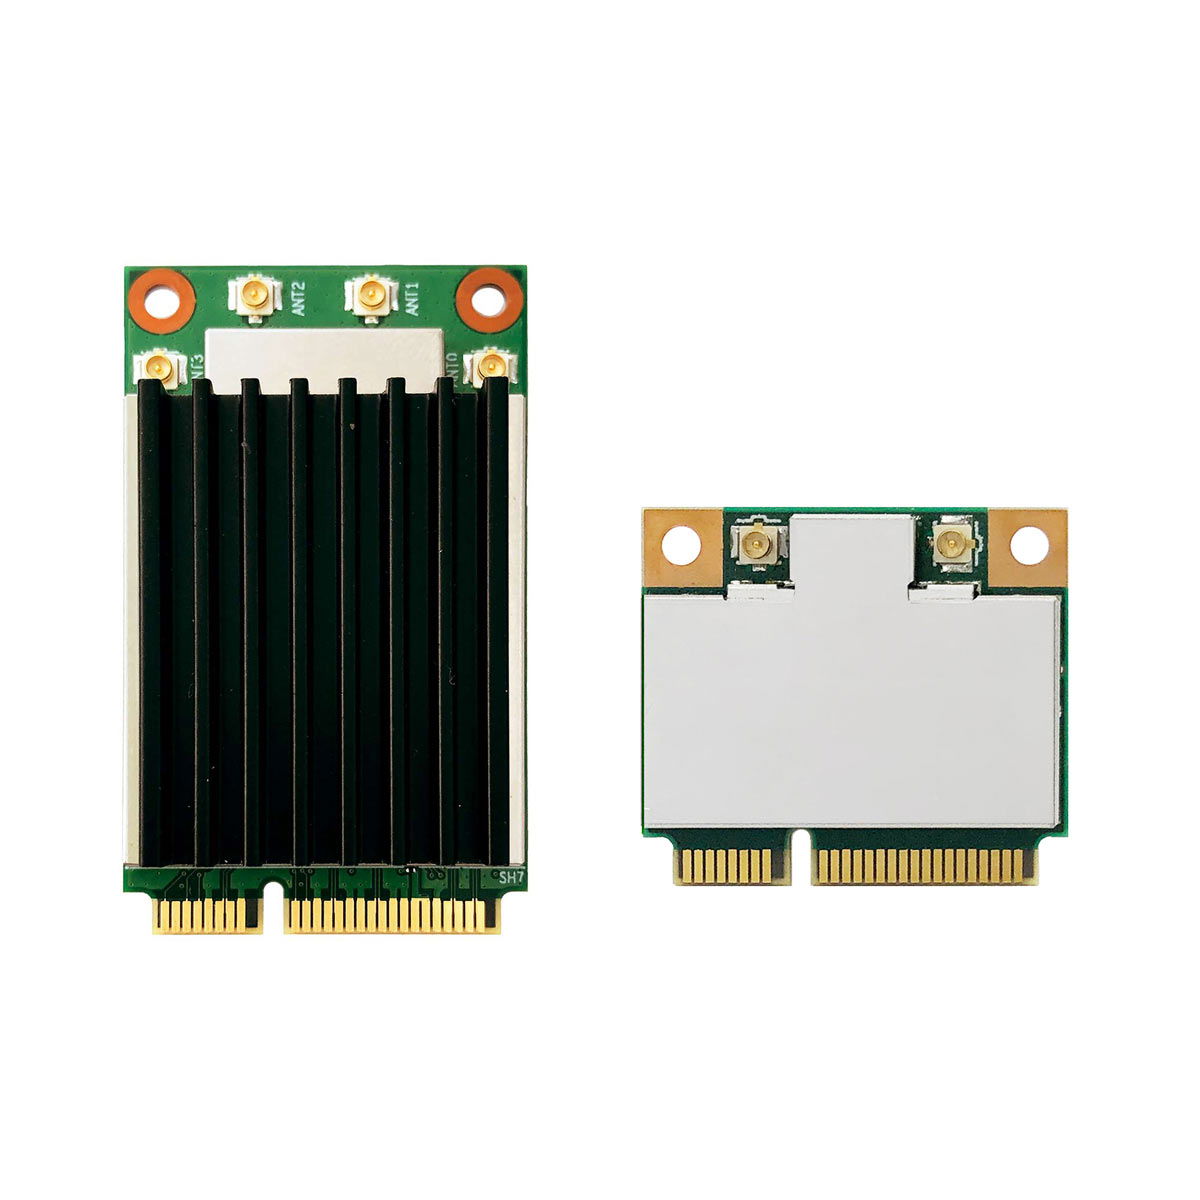 Mini PCIe cards